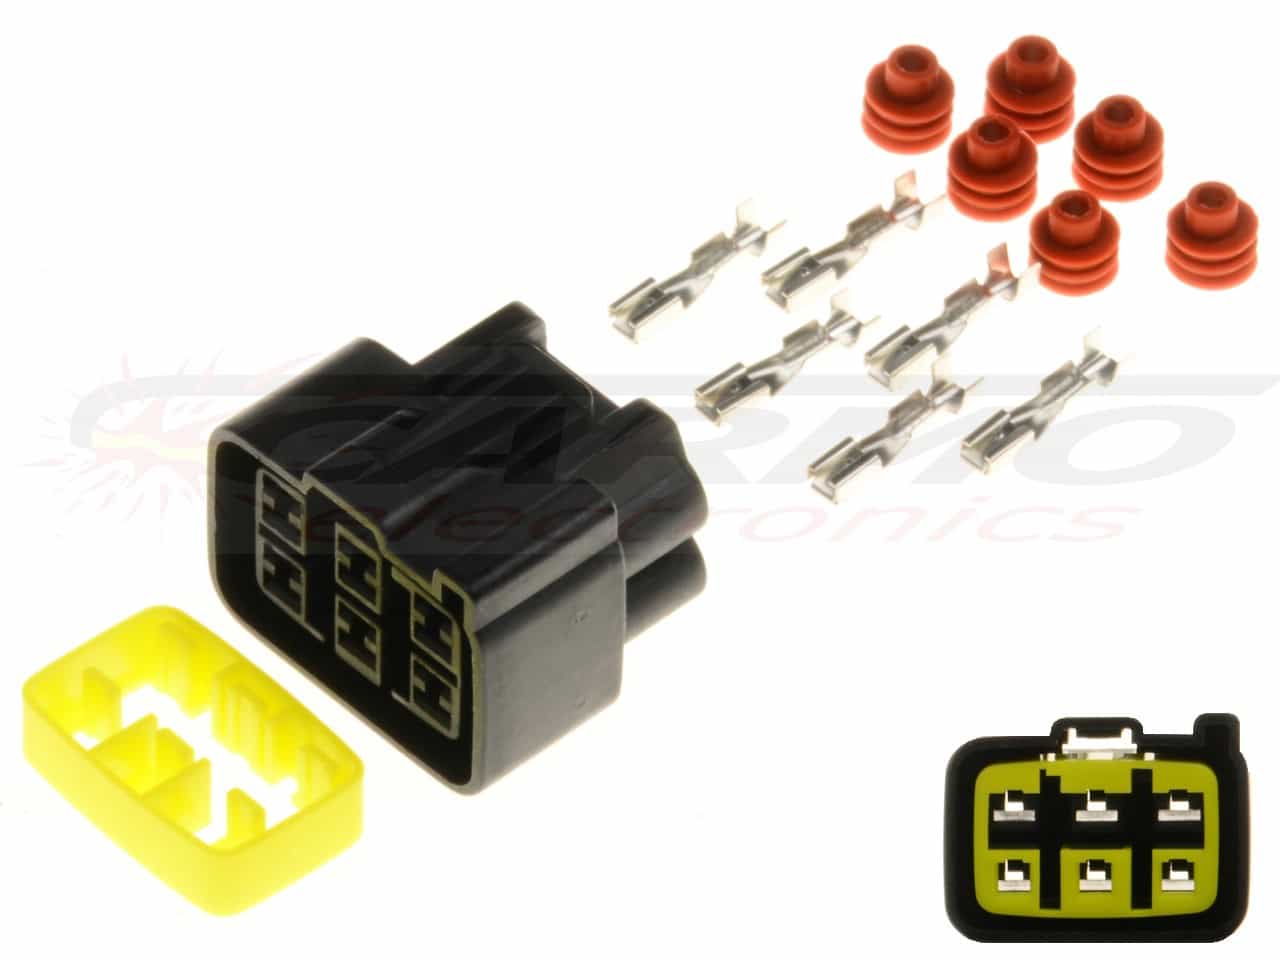 CARR4405 connector voltage regulator rectifier - Clique na Imagem para Fechar